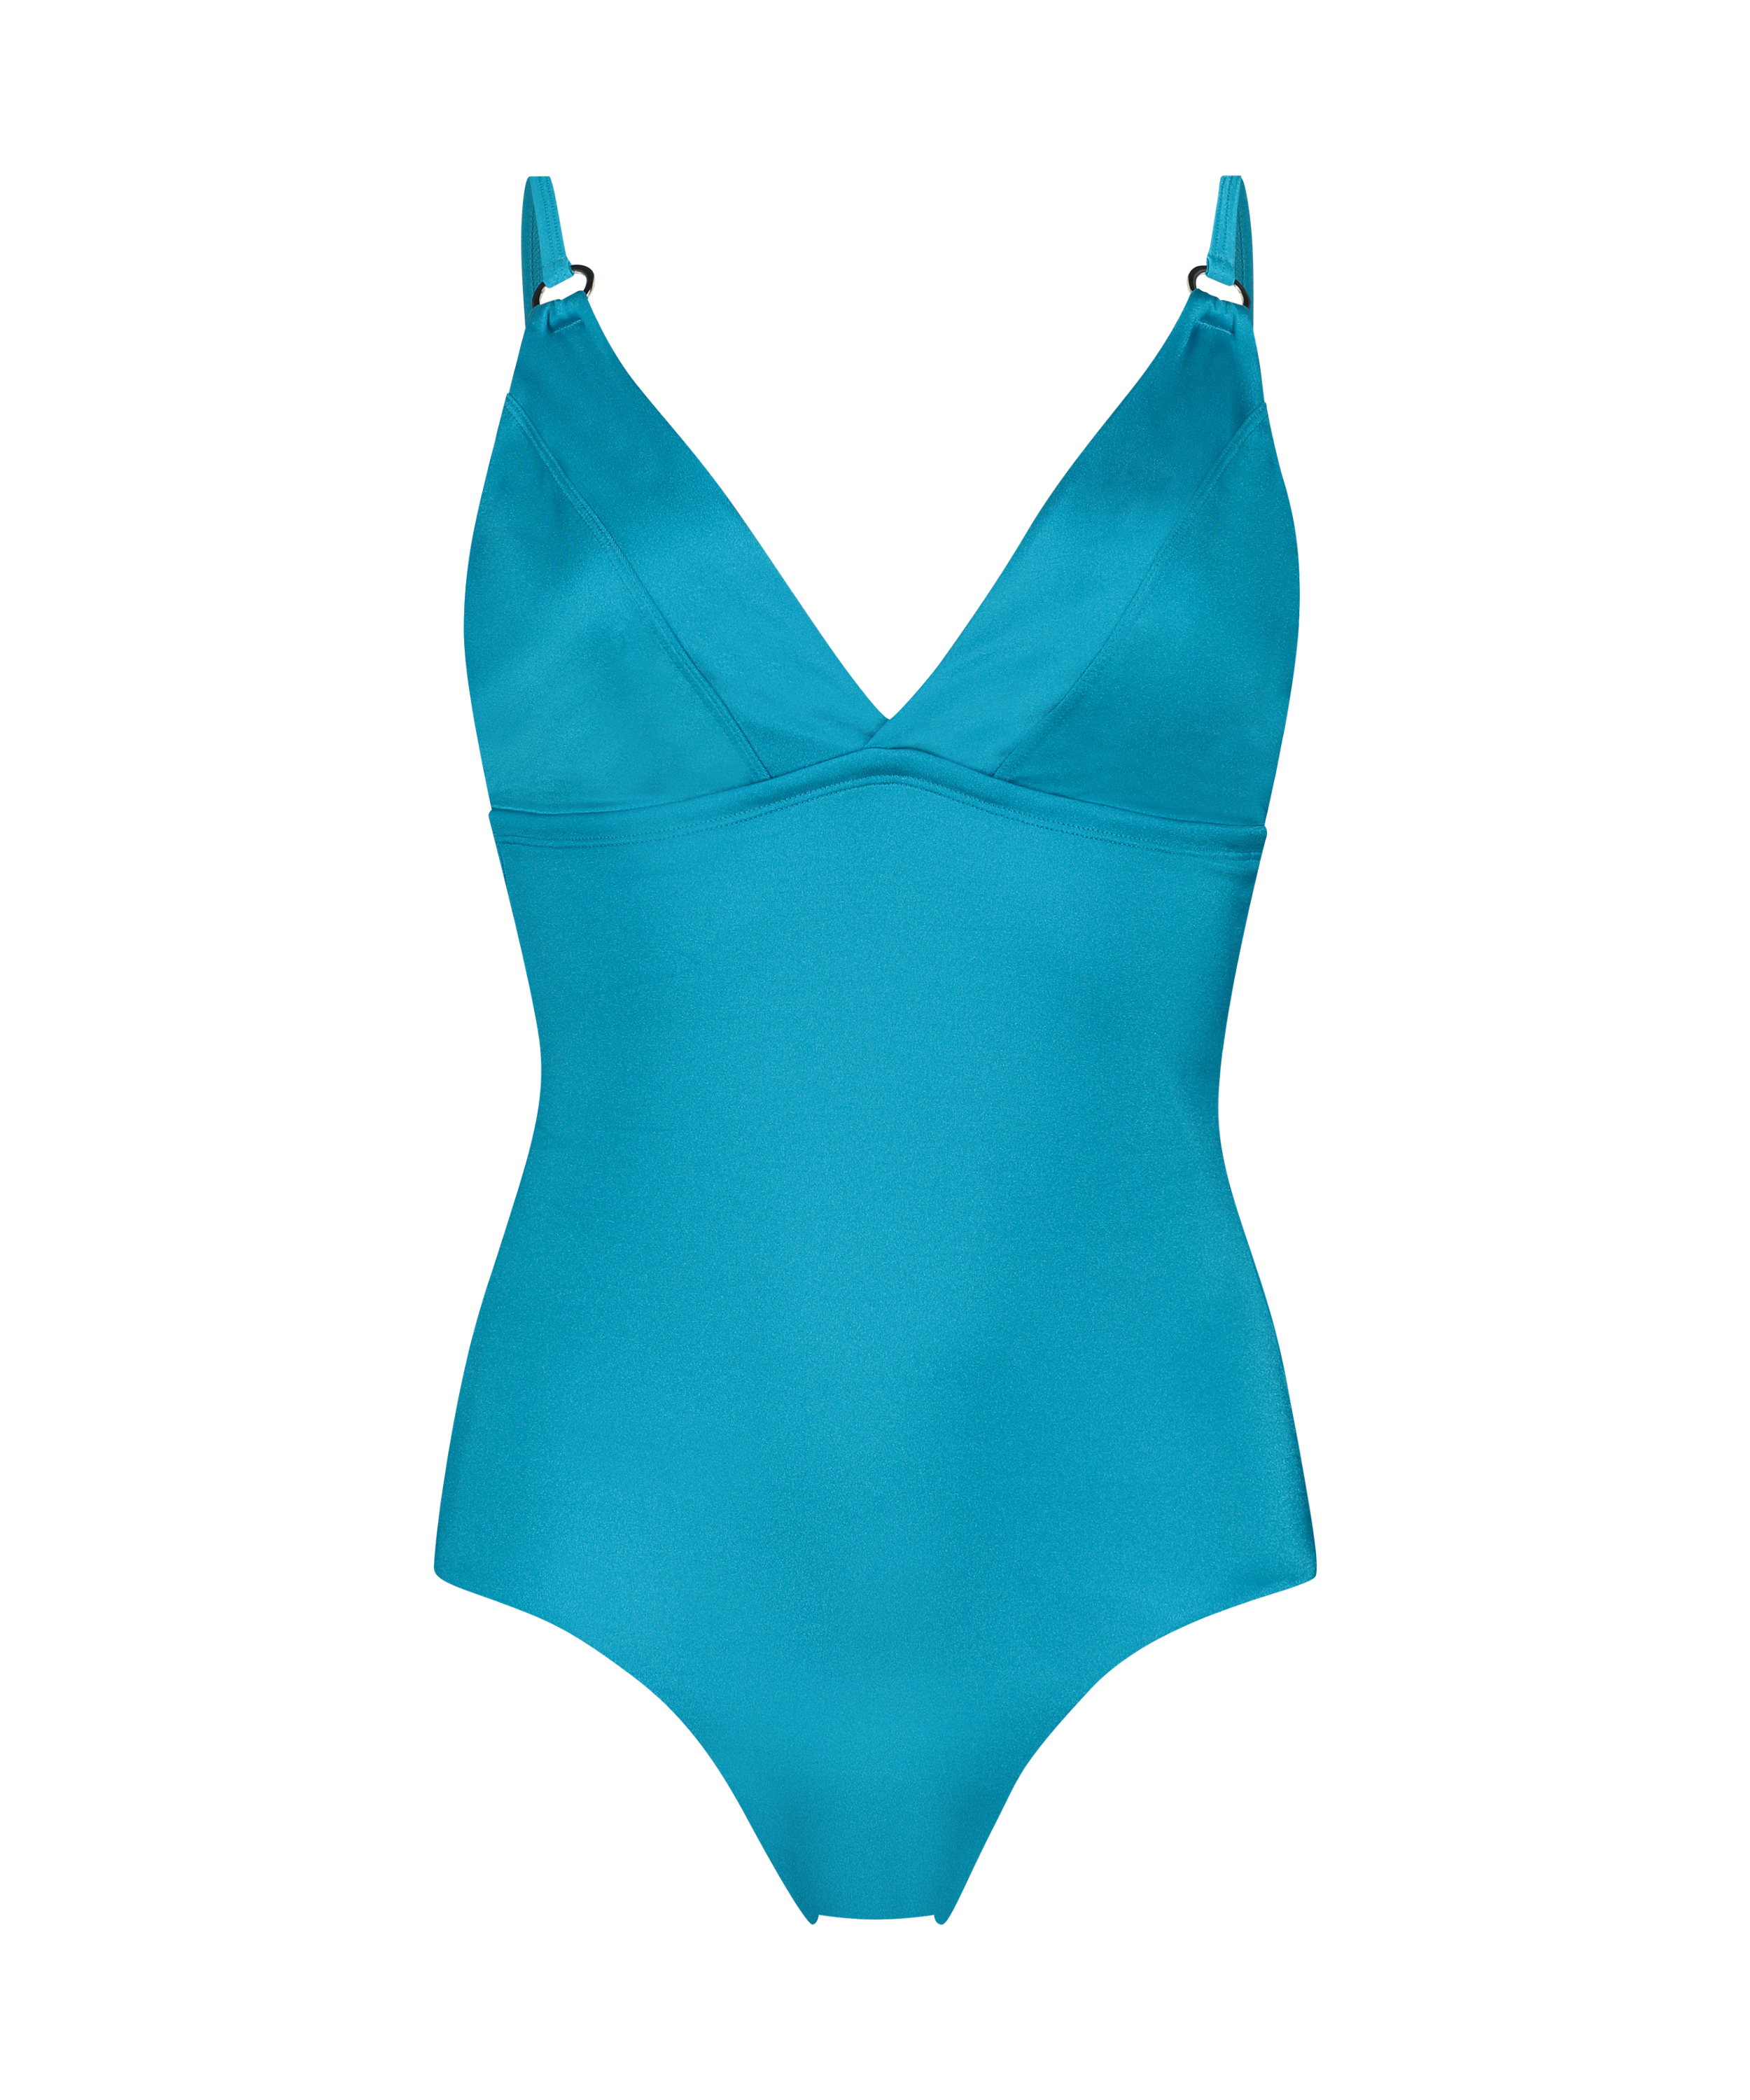 Celine bathing suit for €44.99 - One-piece swimsuit - Hunkemöller